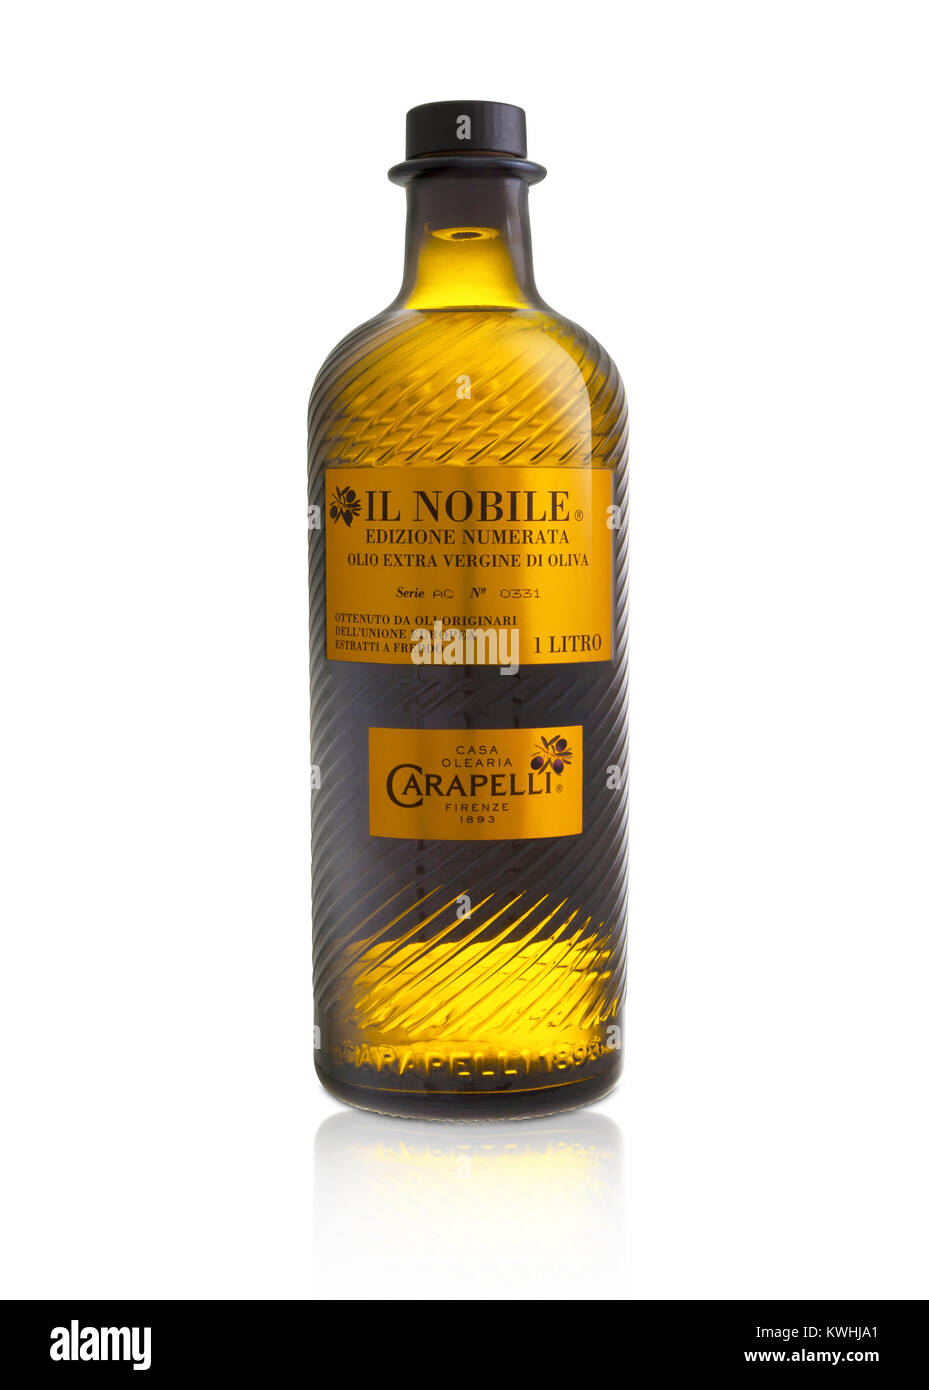 CHISINAU, MOLDOVA - January 4, 2018: Bottle Carapelli Nobile is a fine extra virgin olive oil first cold press Casa Olearia CARAPELLI FIRENZE Italy. С Stock Photo